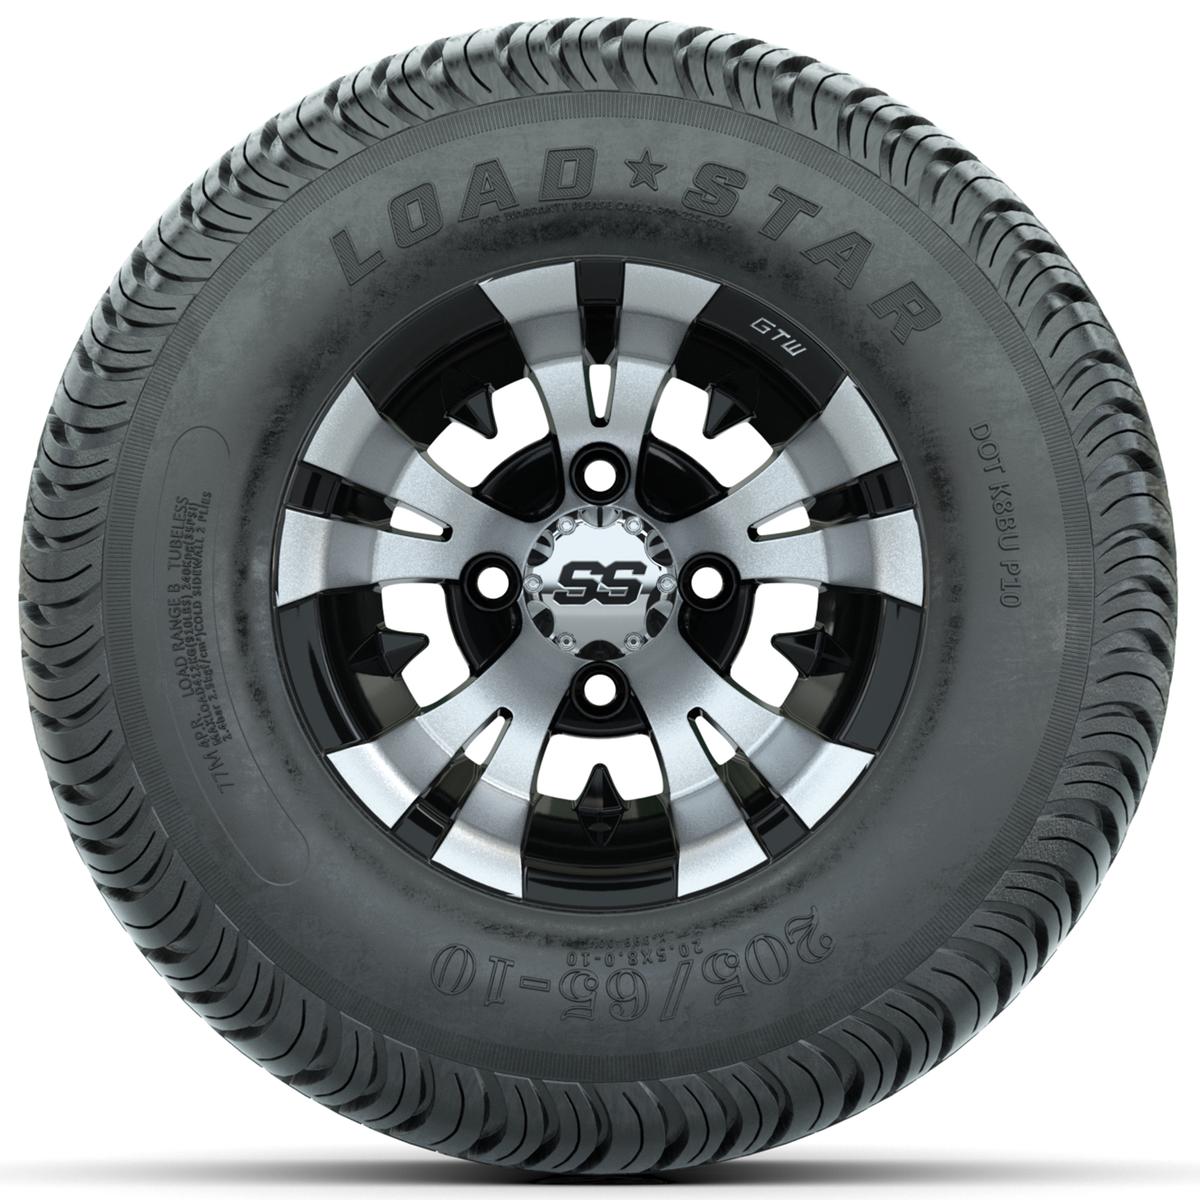 Set of (4) 10 in GTW Vampire Wheels with 205/65-10 Kenda Load Star Tires